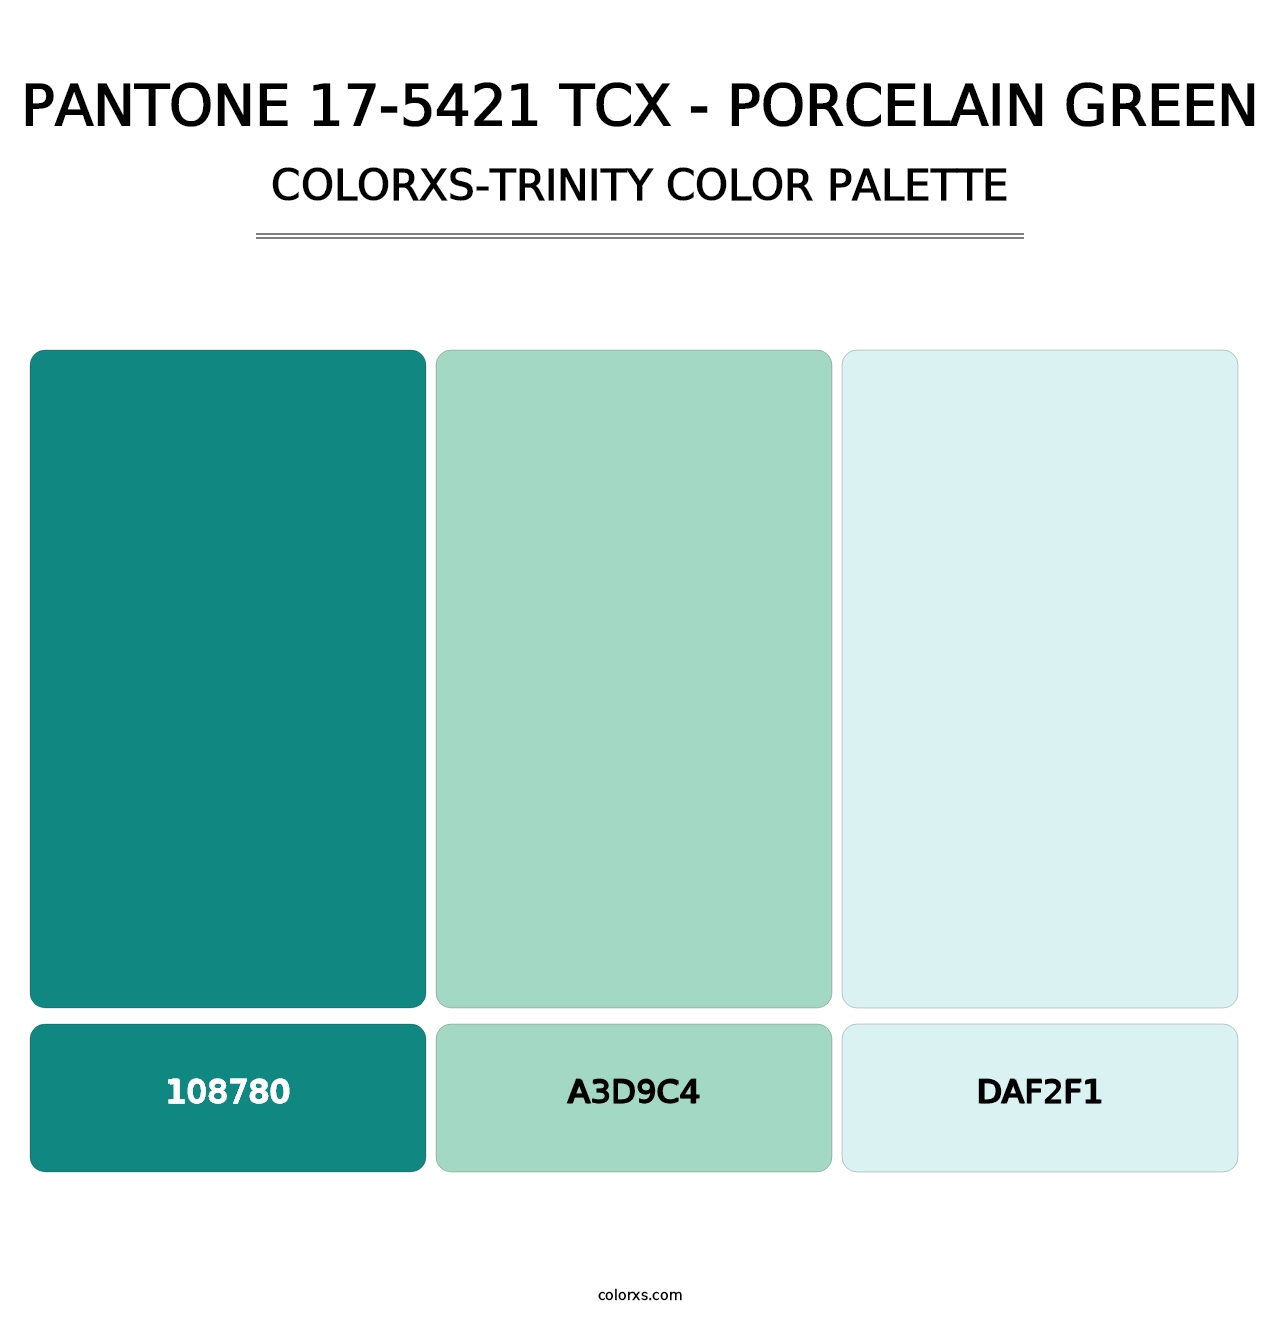 PANTONE 17-5421 TCX - Porcelain Green - Colorxs Trinity Palette